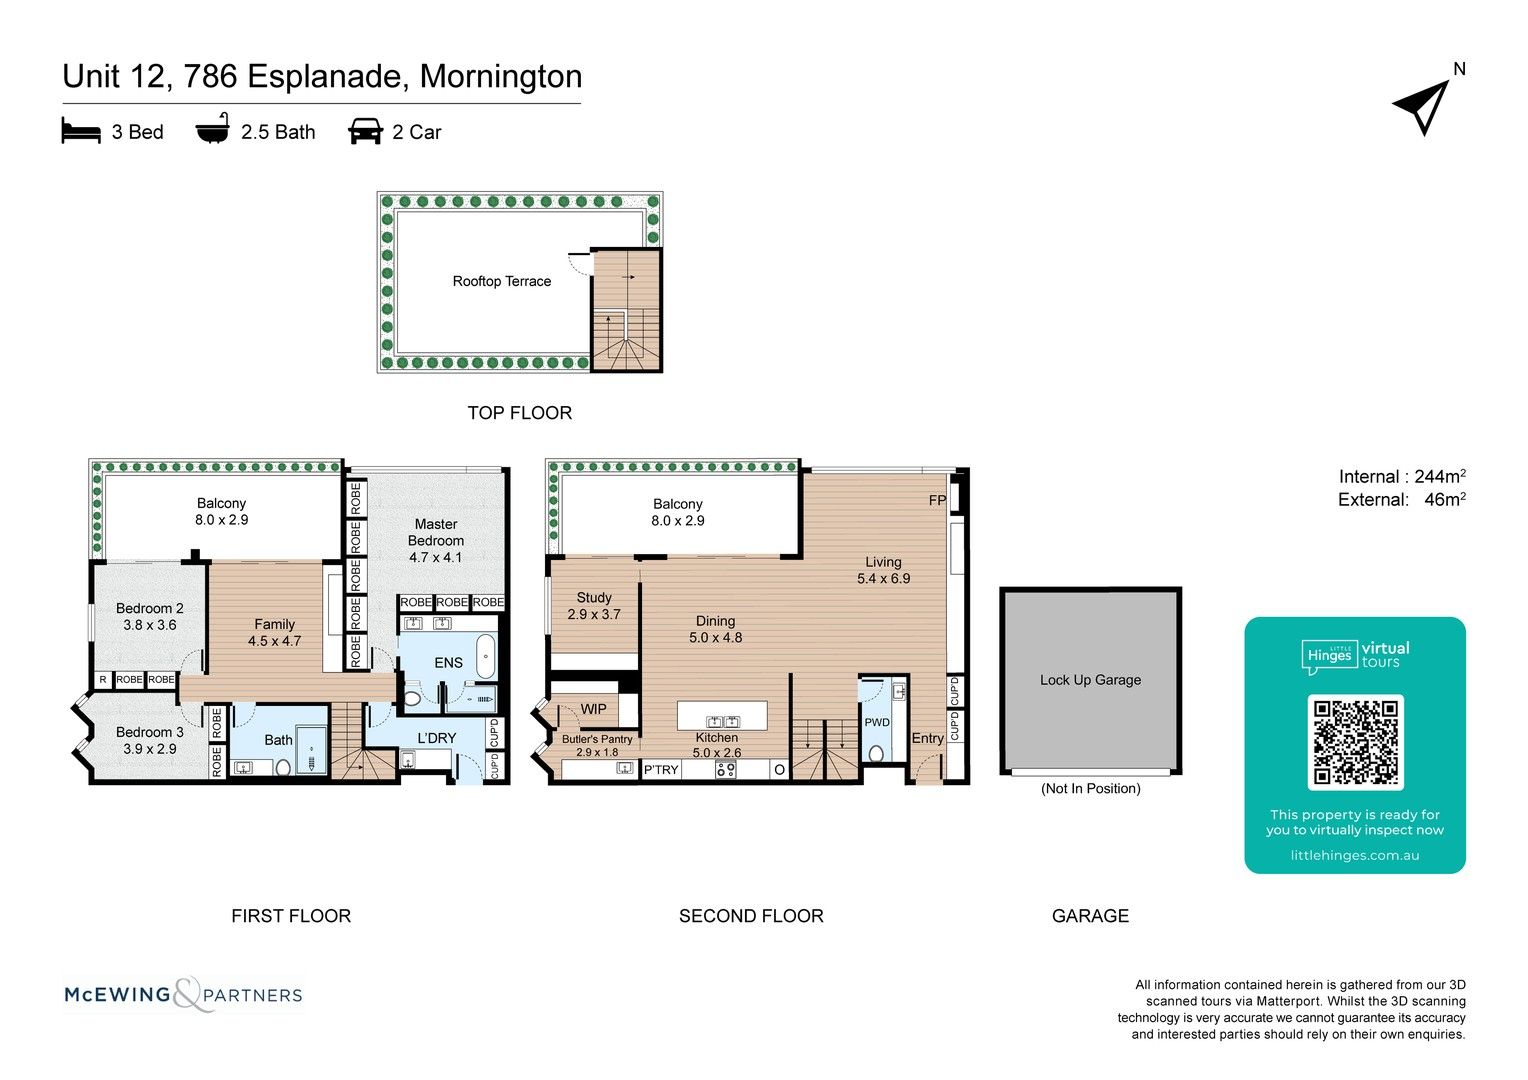 4 bedrooms Apartment / Unit / Flat in 12/786 Esplanade MORNINGTON VIC, 3931